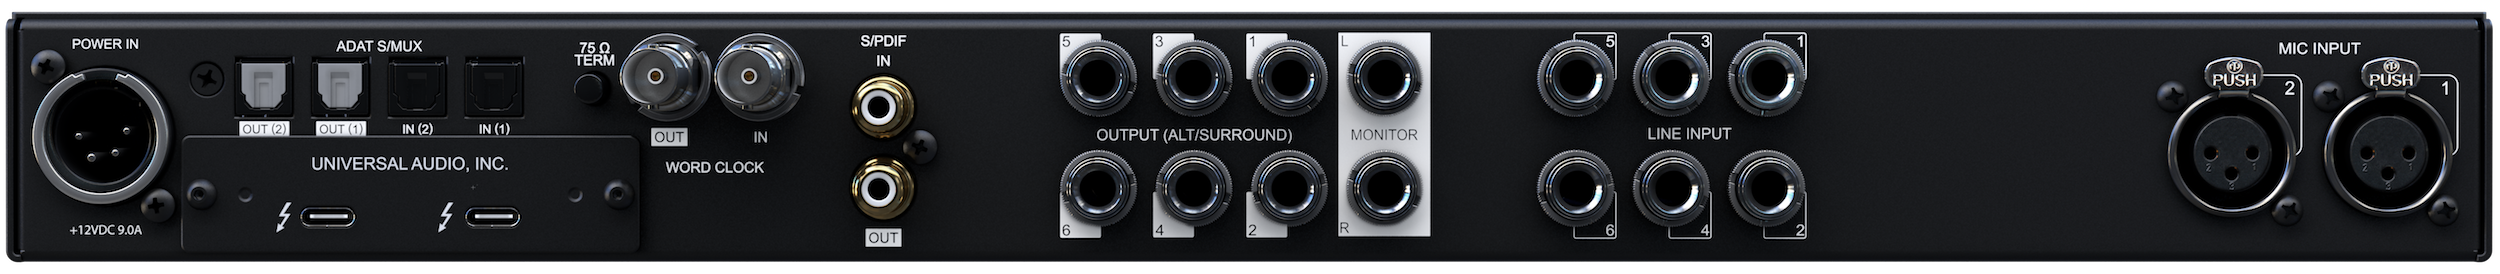 Universal Audio Apollo X6 - Thunderbolt audio-interface - Variation 2